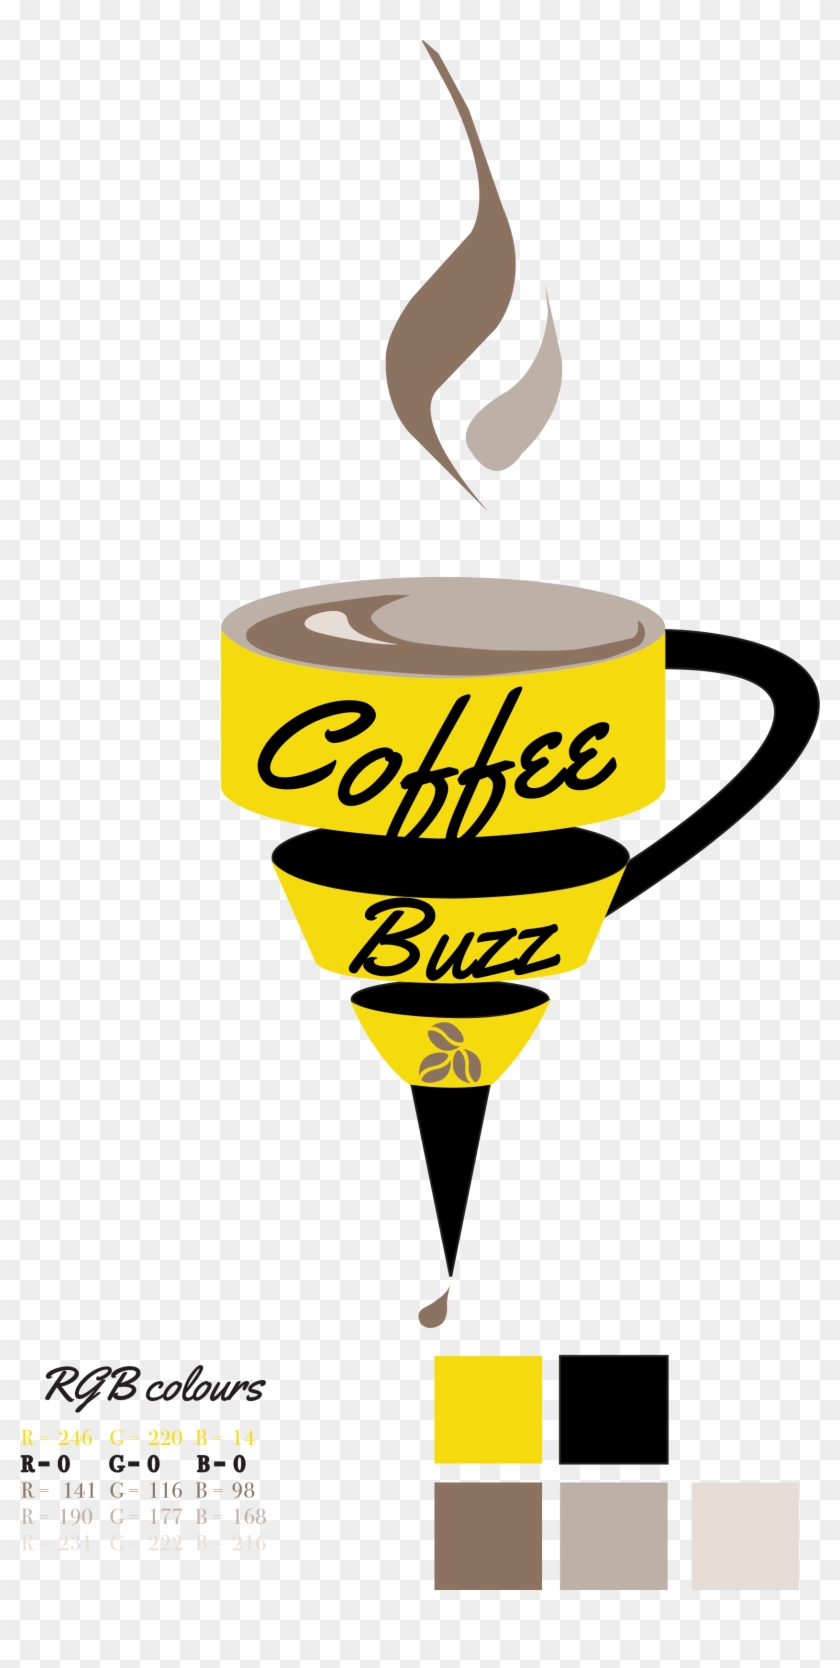 Coffee Buzz Logo In Rgb Colours - Coffee #1115026